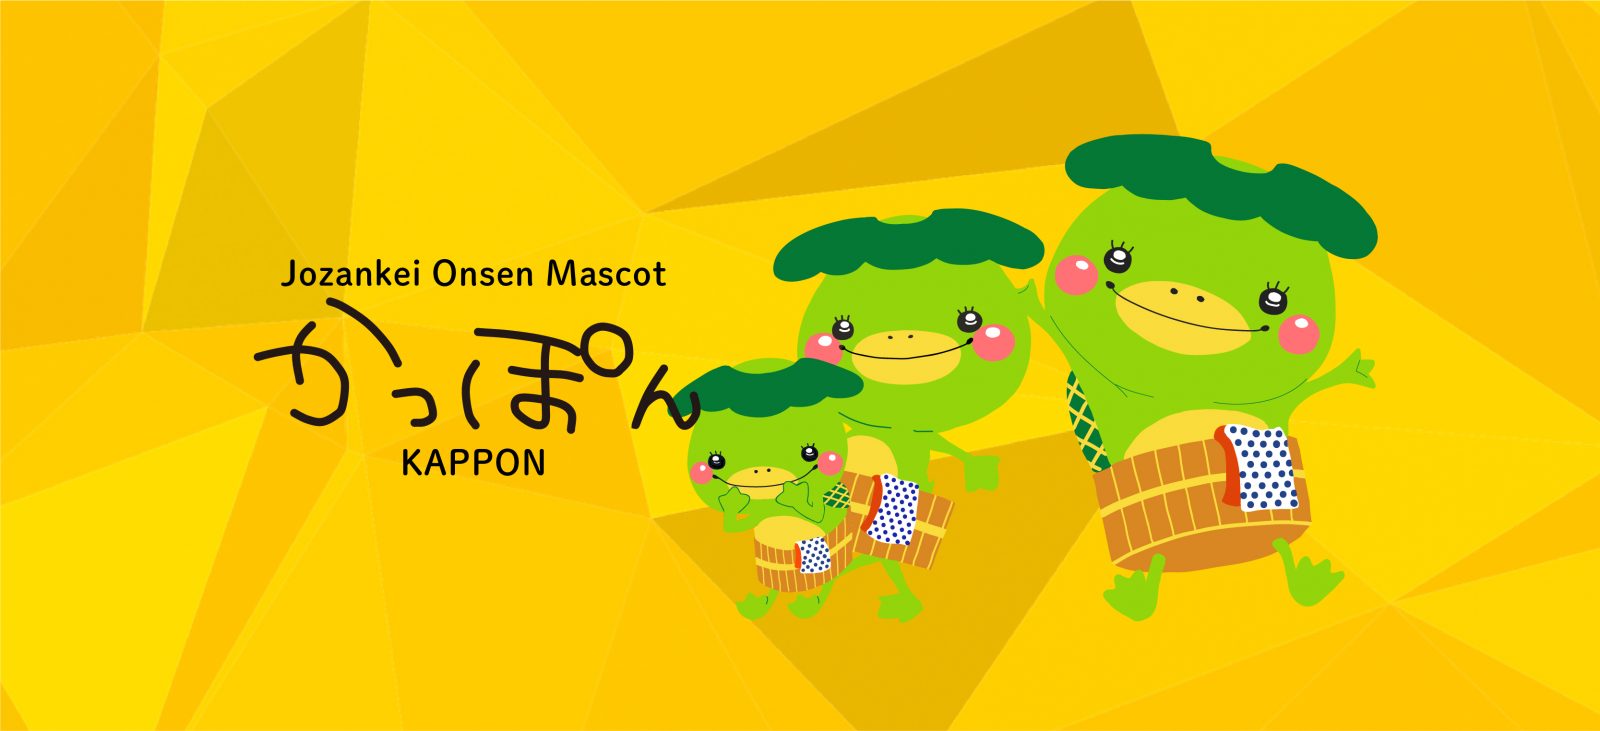 Jozankei Onsen Mascot Kappon